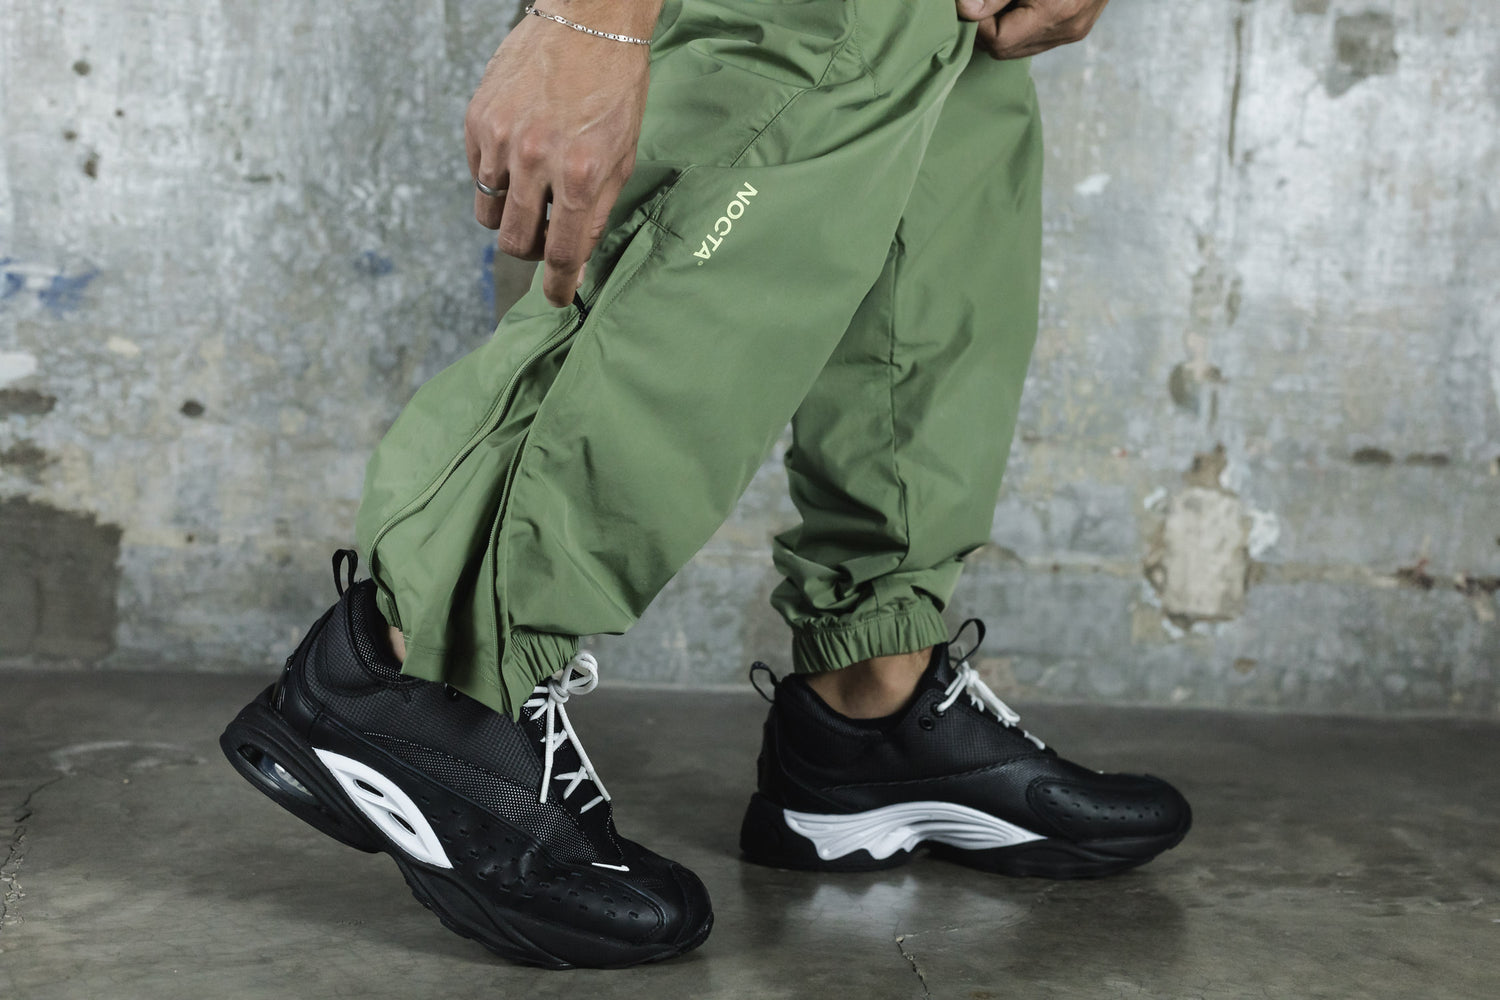 Nike x NOCTA Woven Track Pants